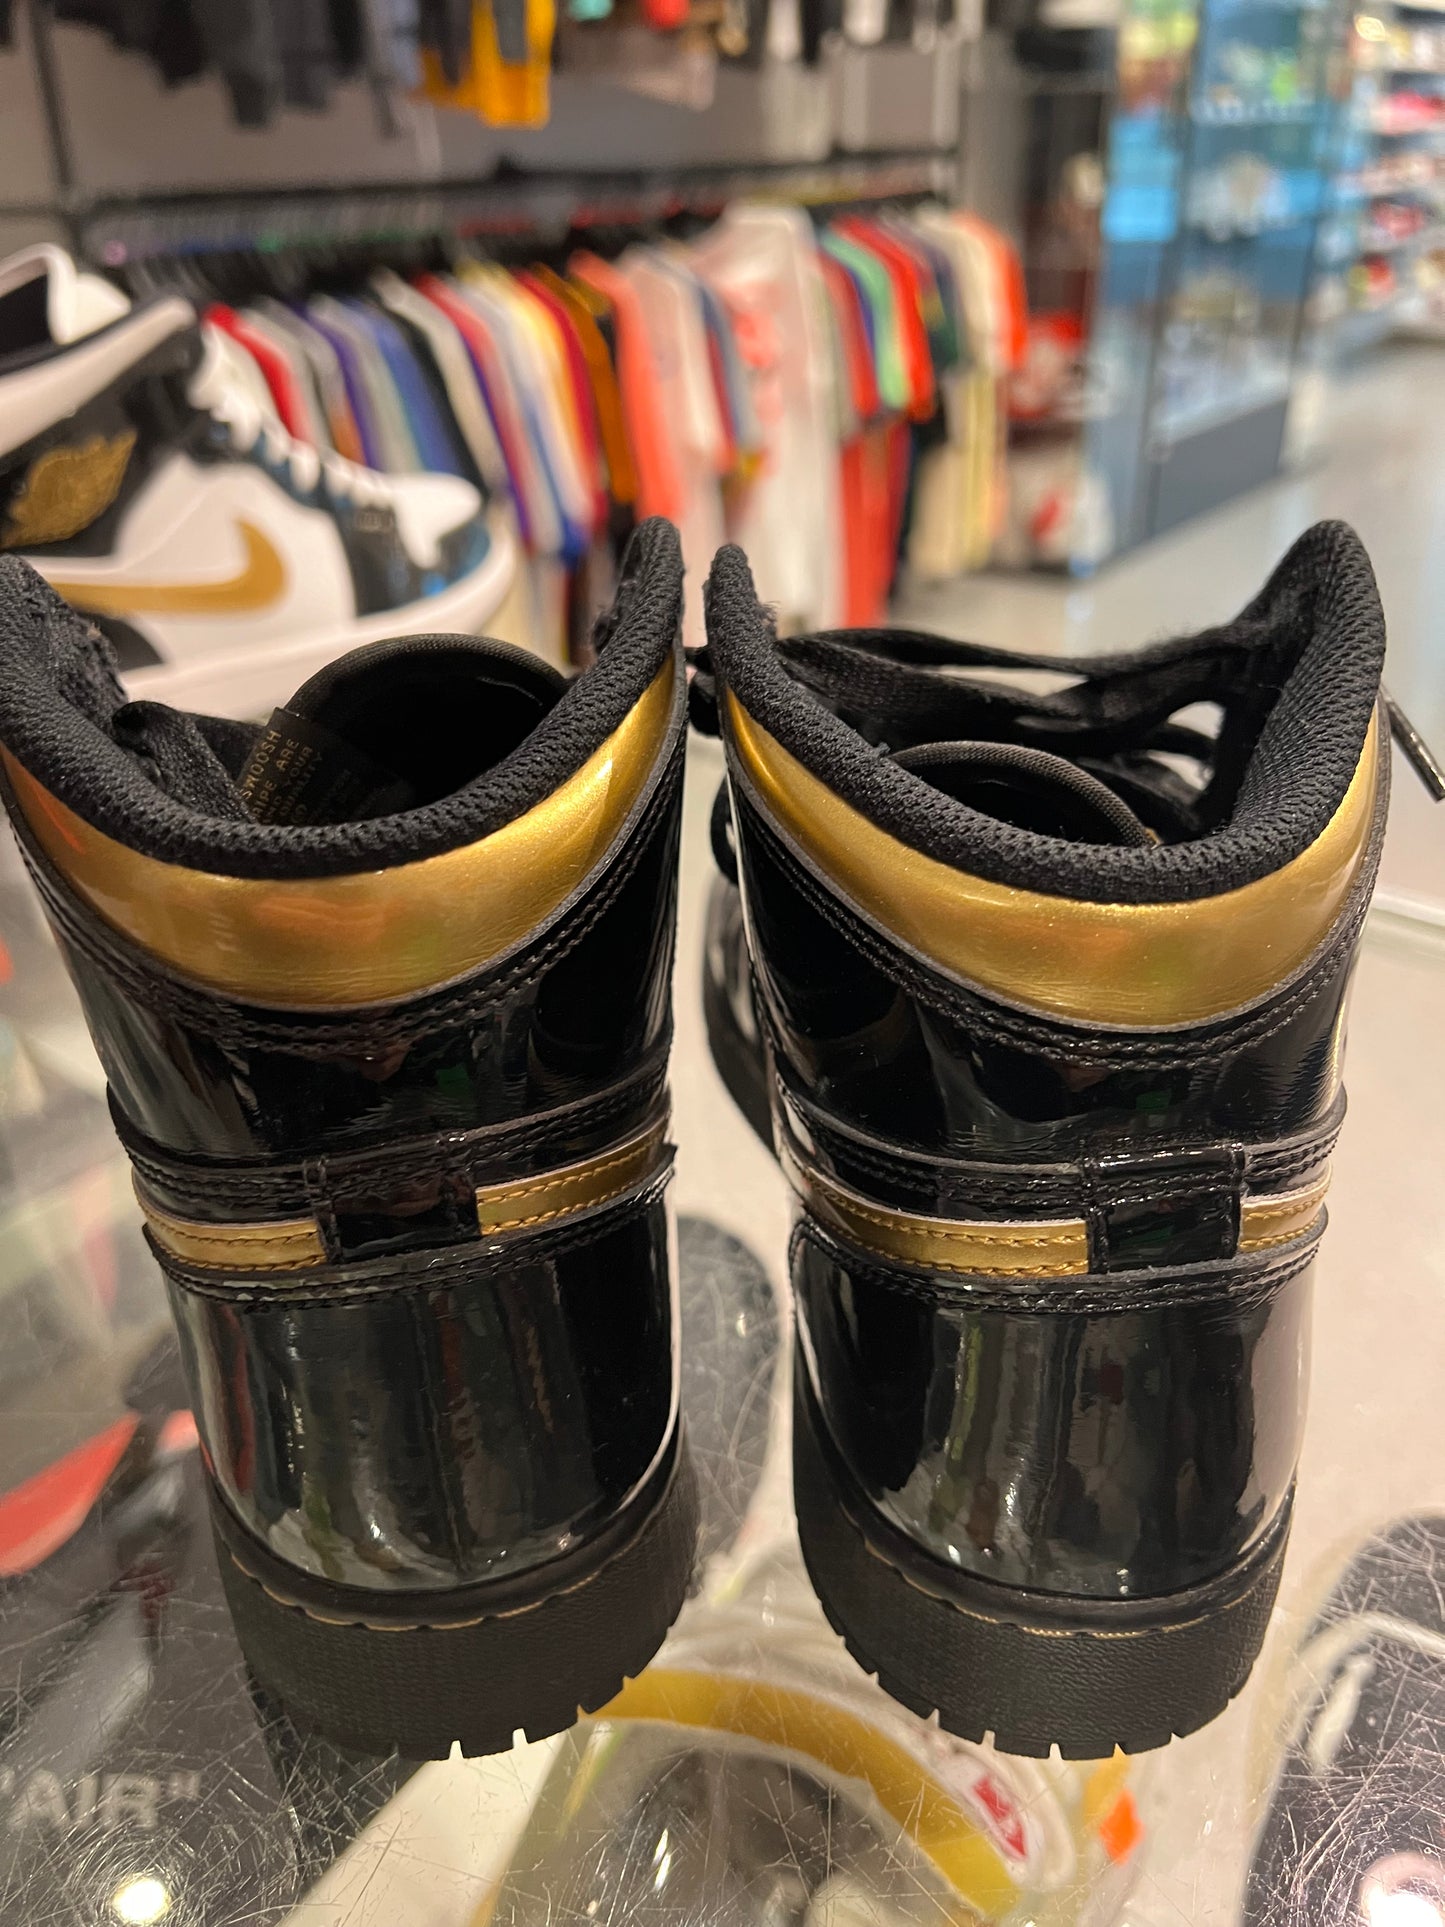 Size 5.5y Air Jordan 1 “Metallic Gold” (Mall)